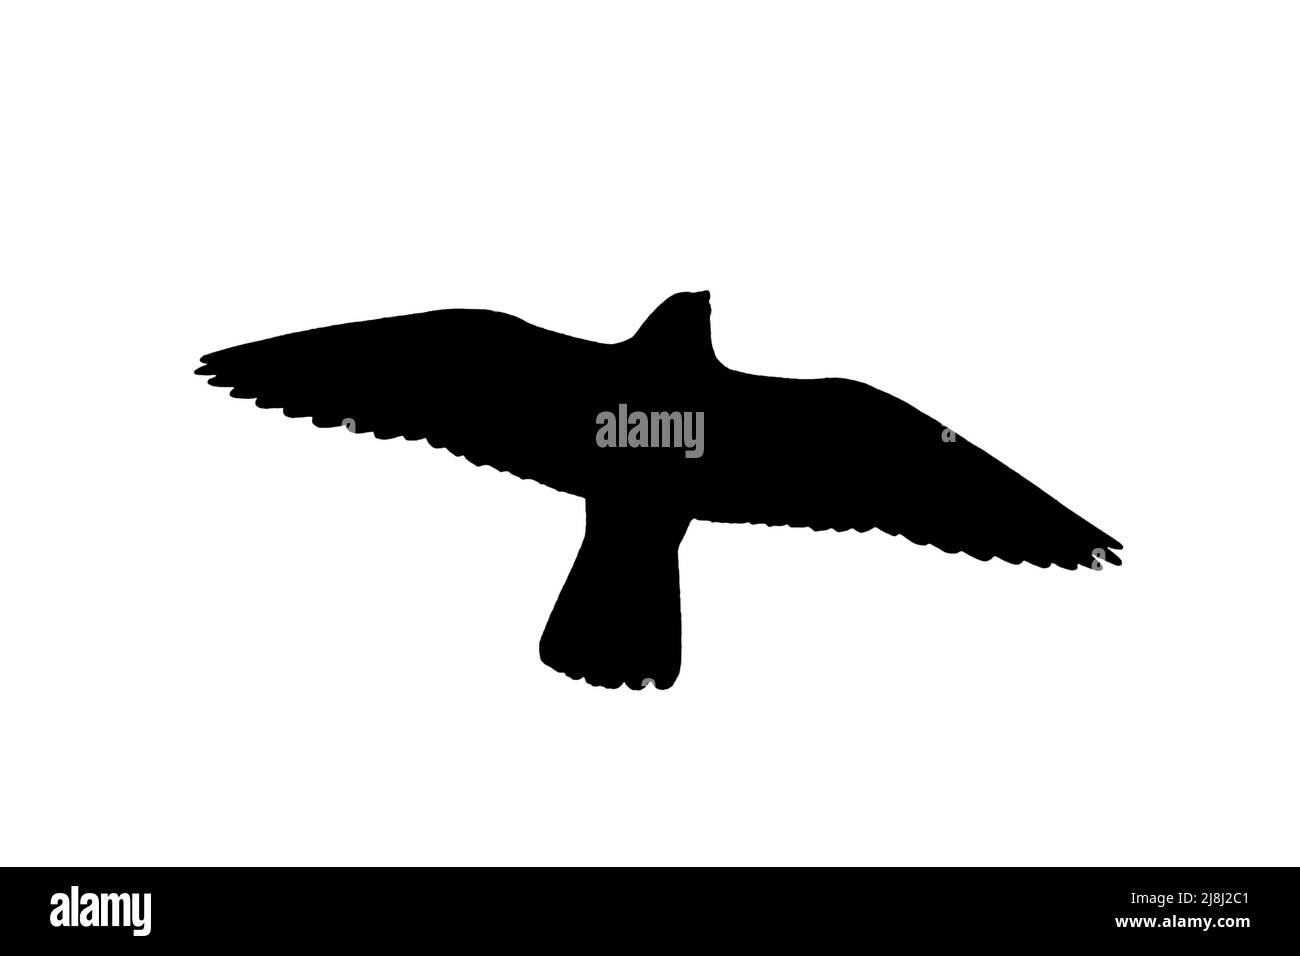 Silueta de halcón peregrino (Falco peregrinus) en vuelo contorneado sobre fondo blanco para mostrar alas, cabeza y cola Foto de stock